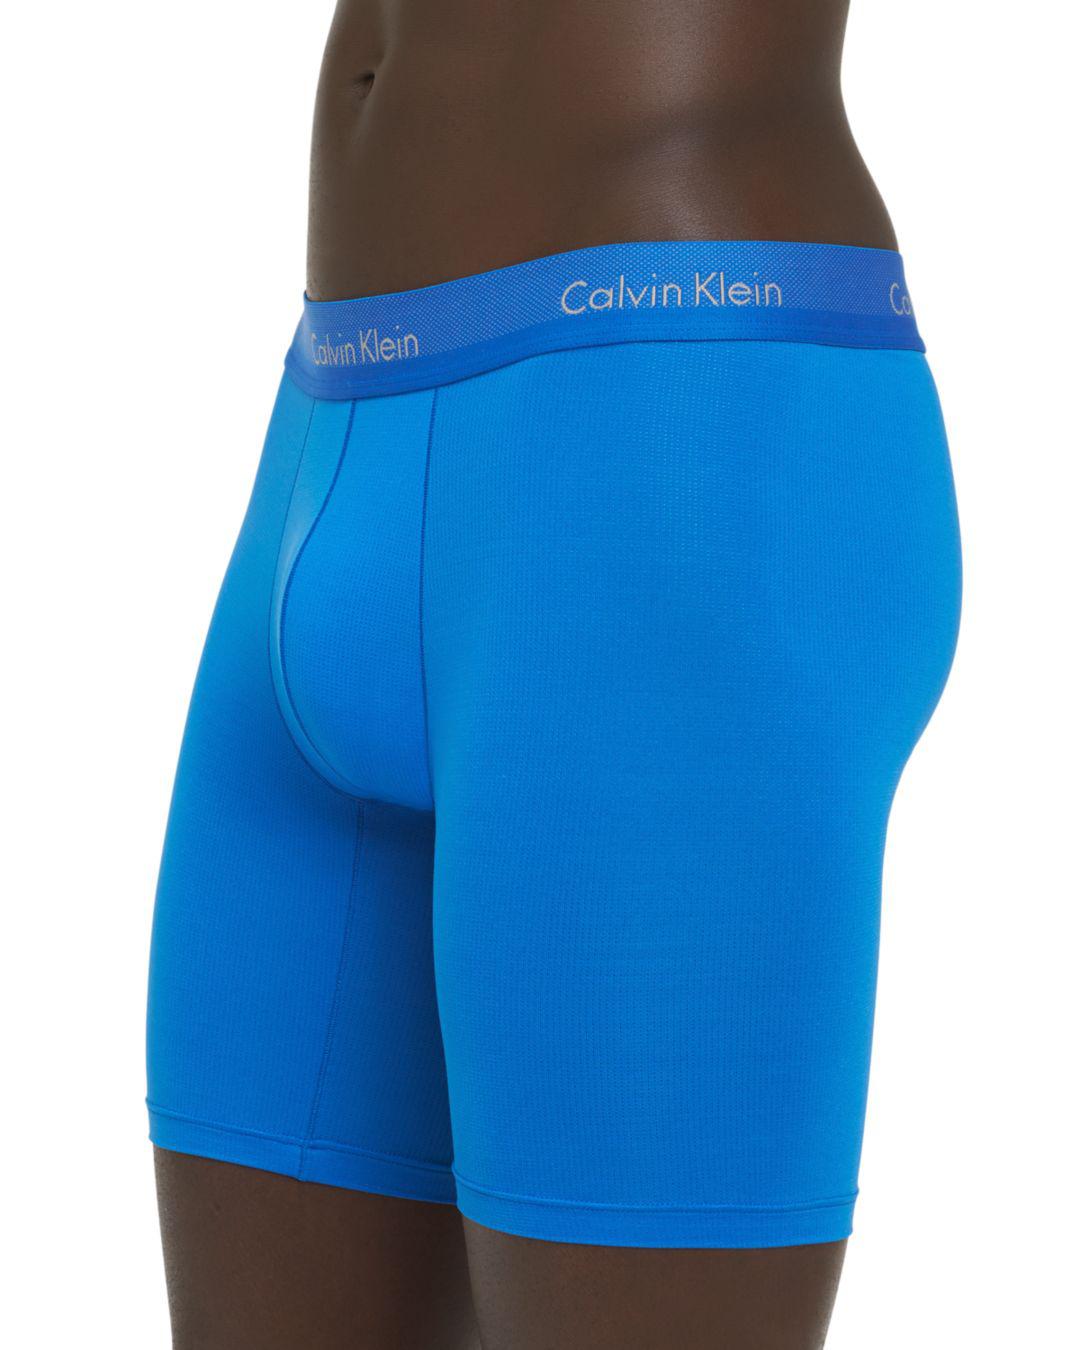 Calvin Klein Synthetic Underwear Light Boxer Briefs in Blue for Men - Lyst